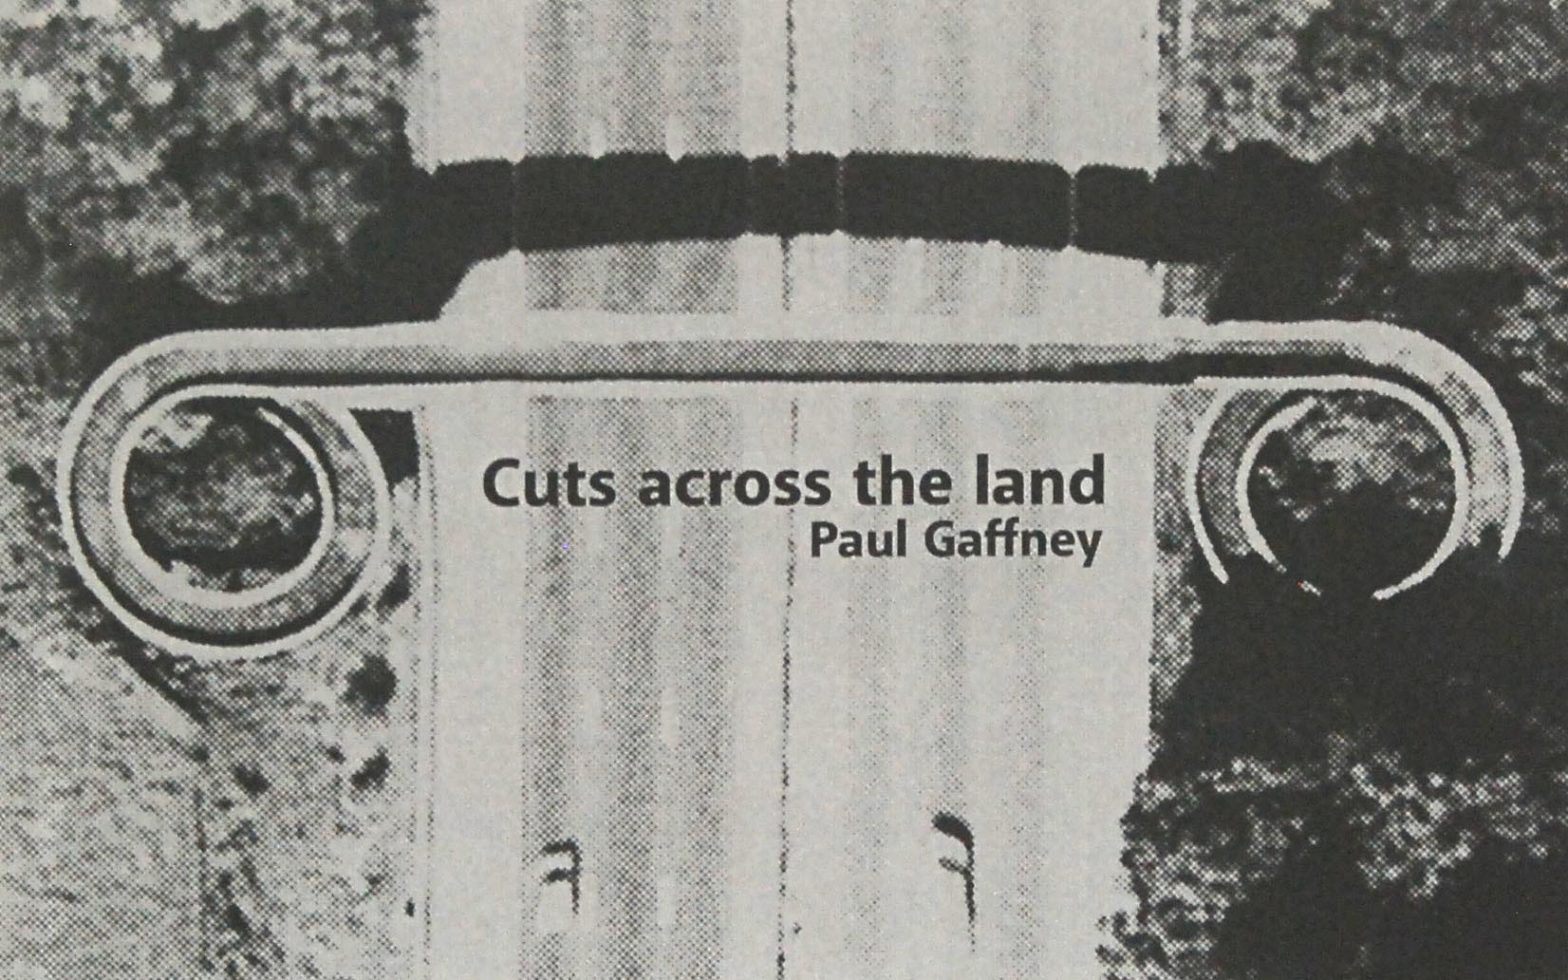 Cut across the land, Paul Gaffney